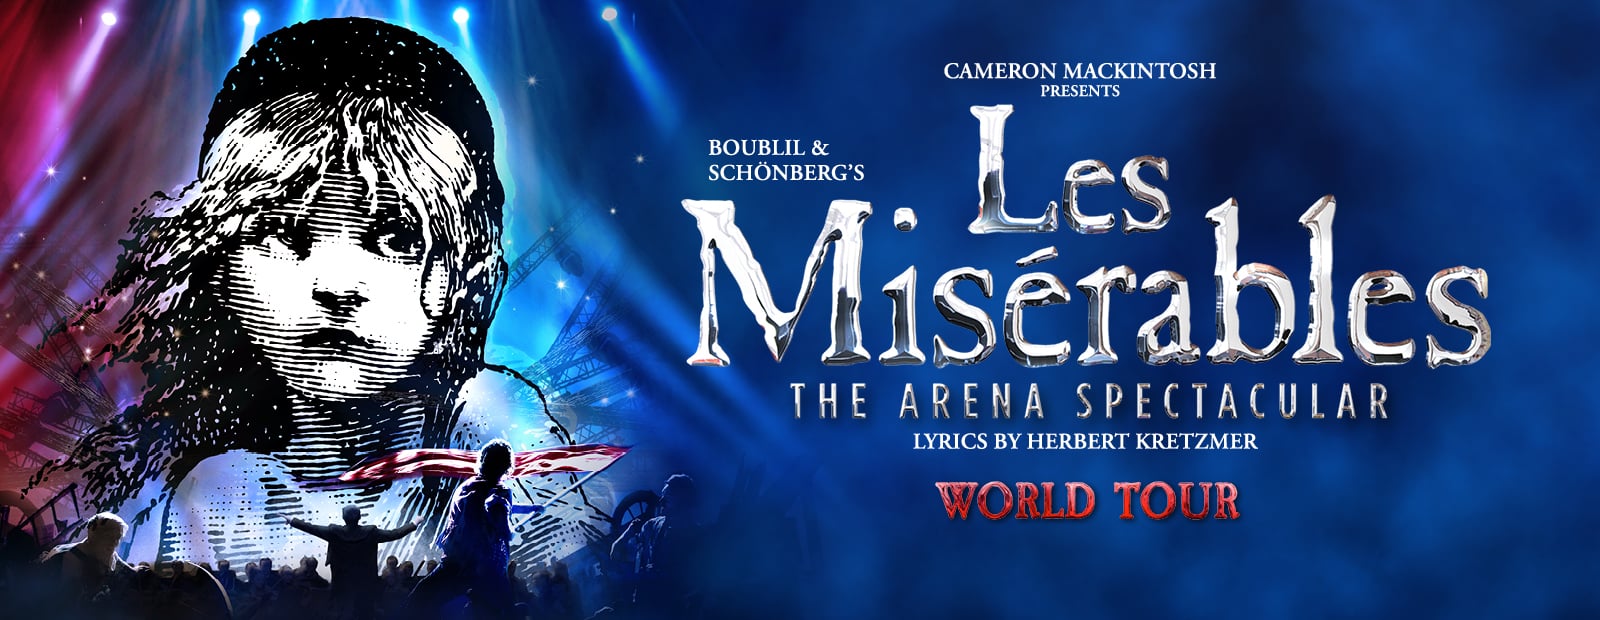 Les Misérables - The Arena Spectacular